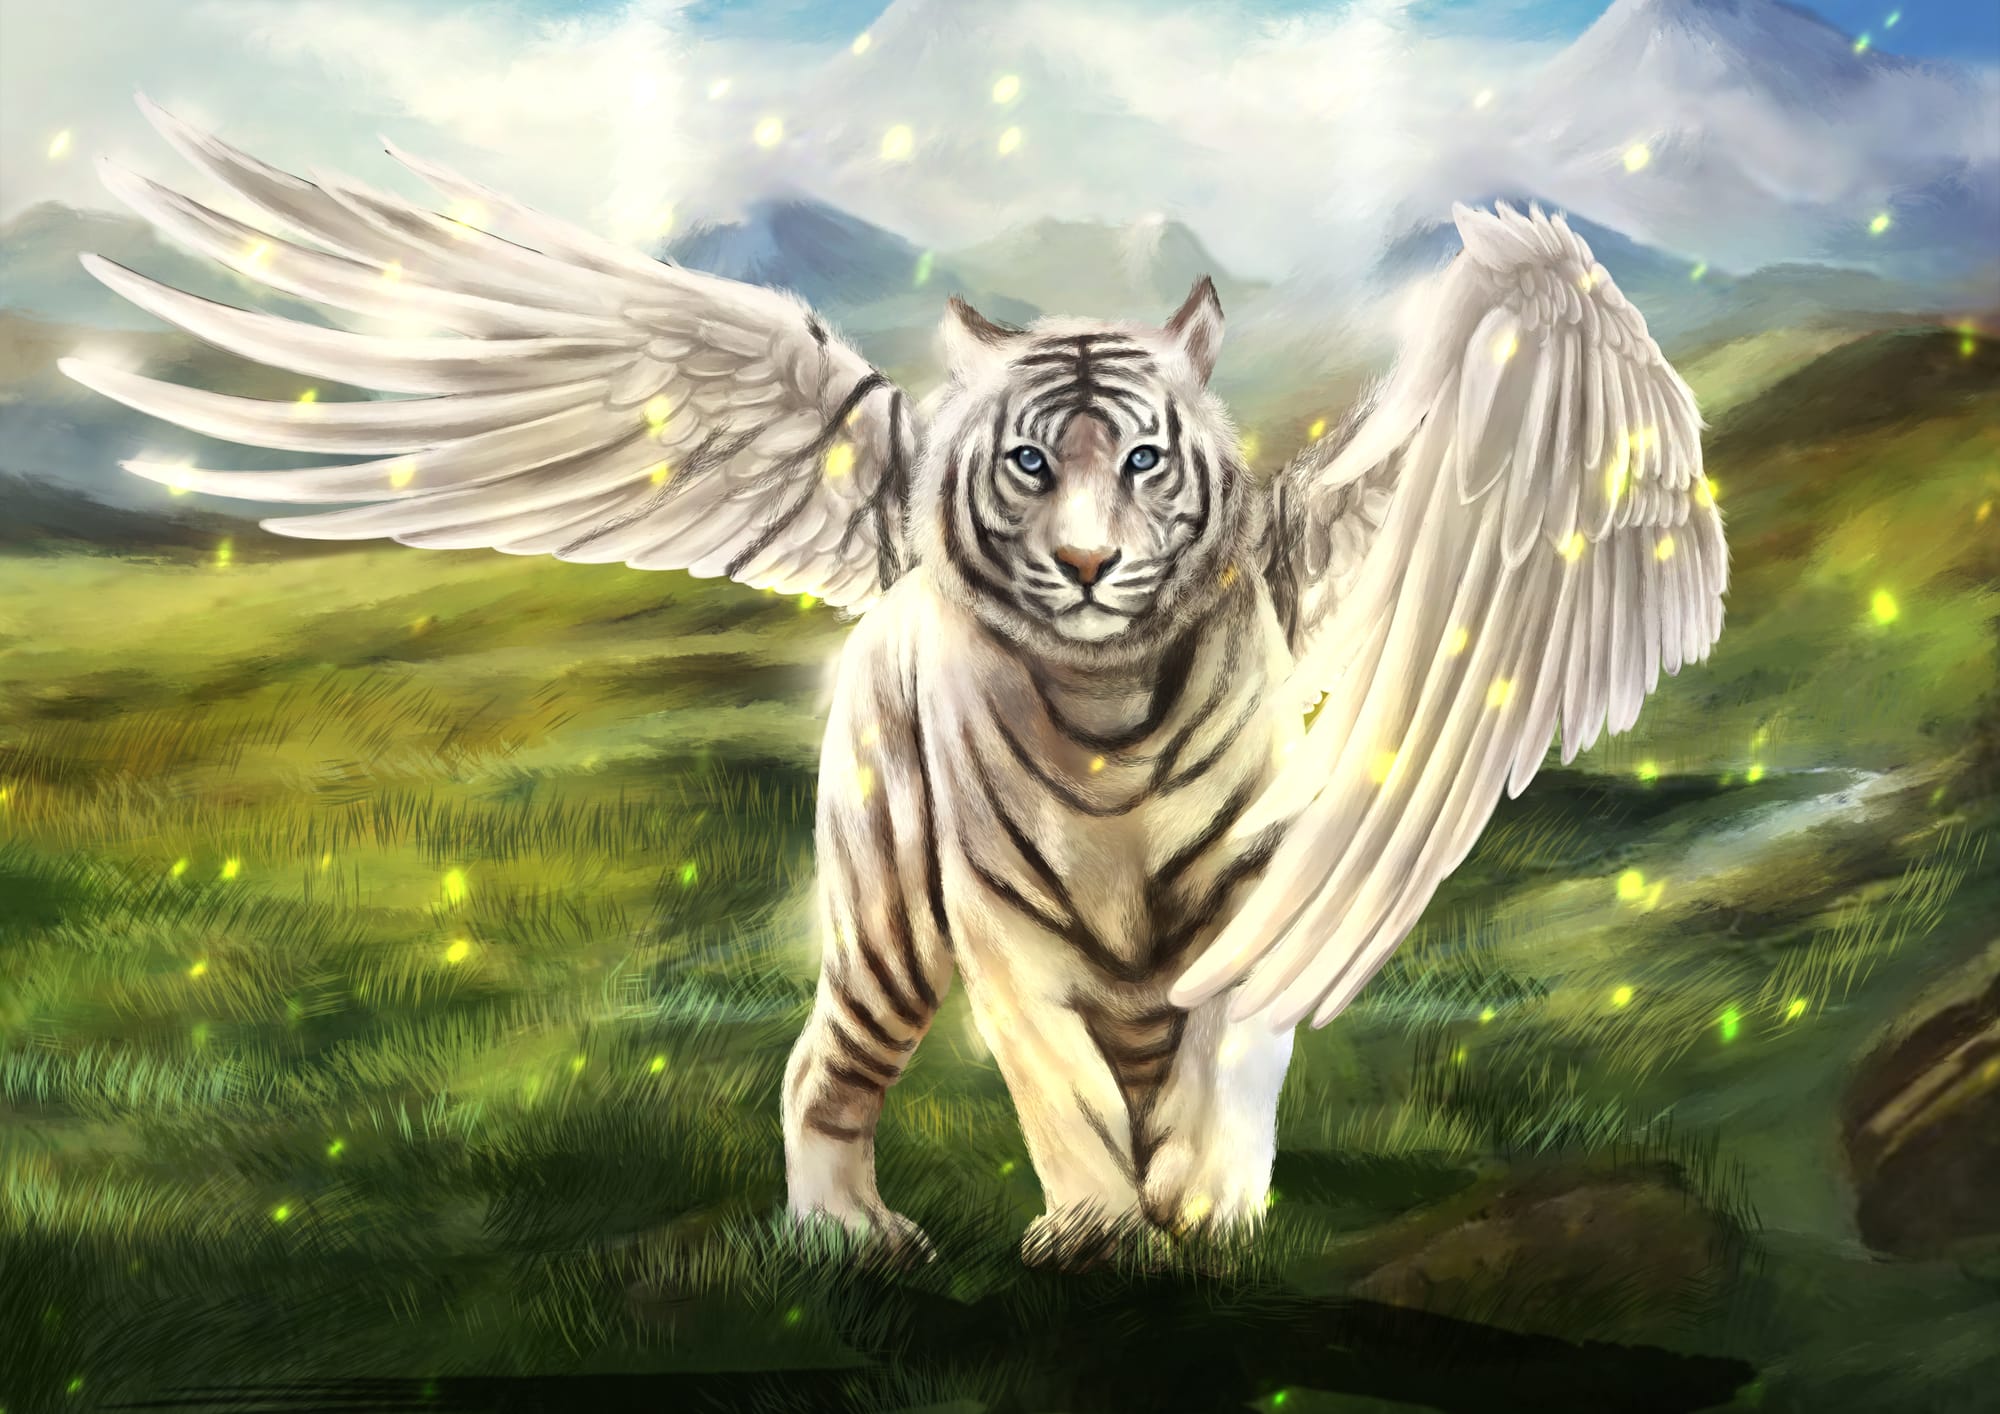 Nala - The Majestic White Tiger